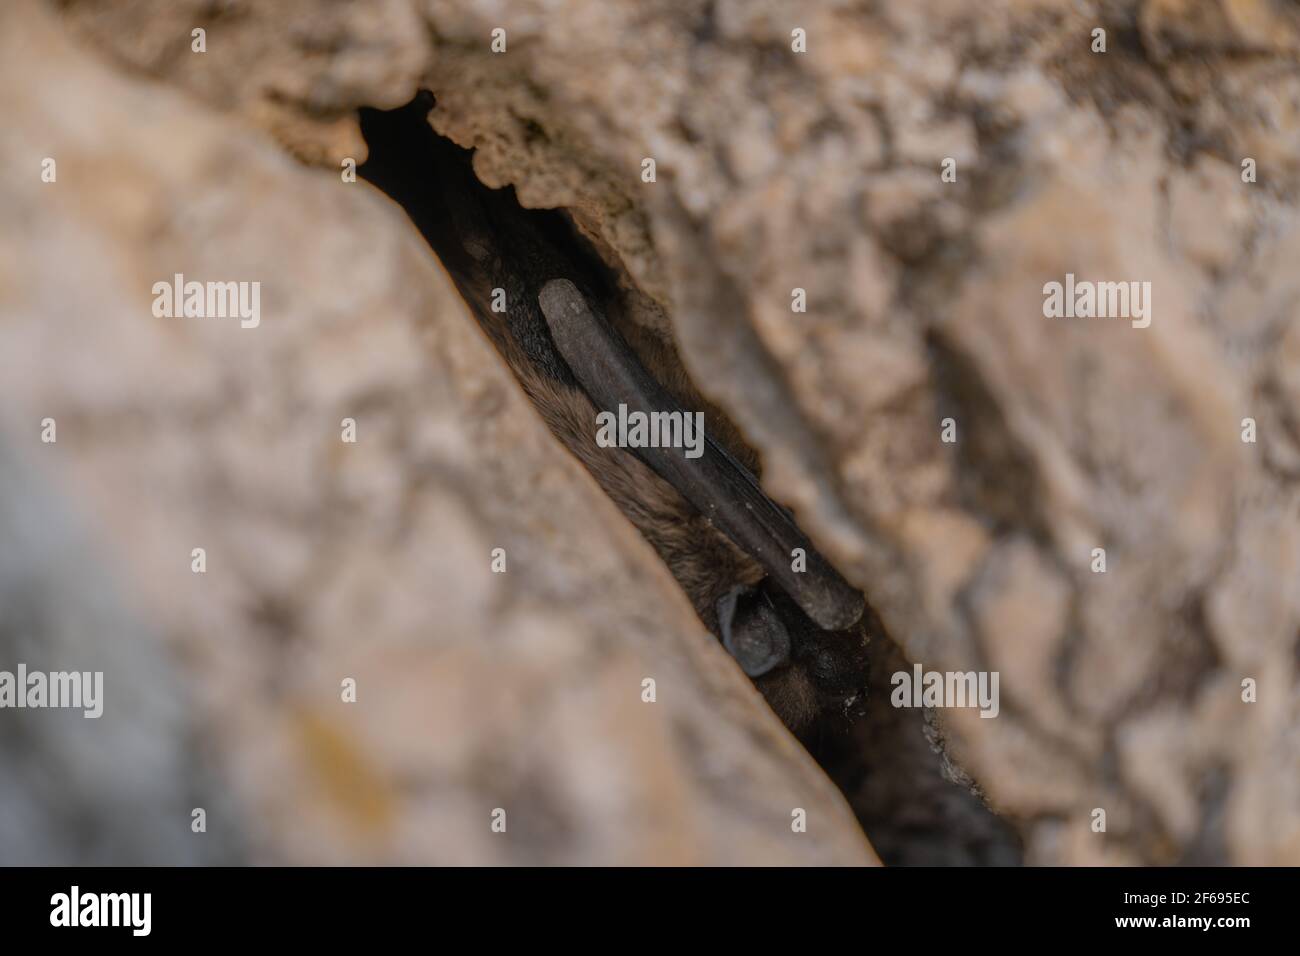 A little bat hiding in a rock crevice Stock Photo